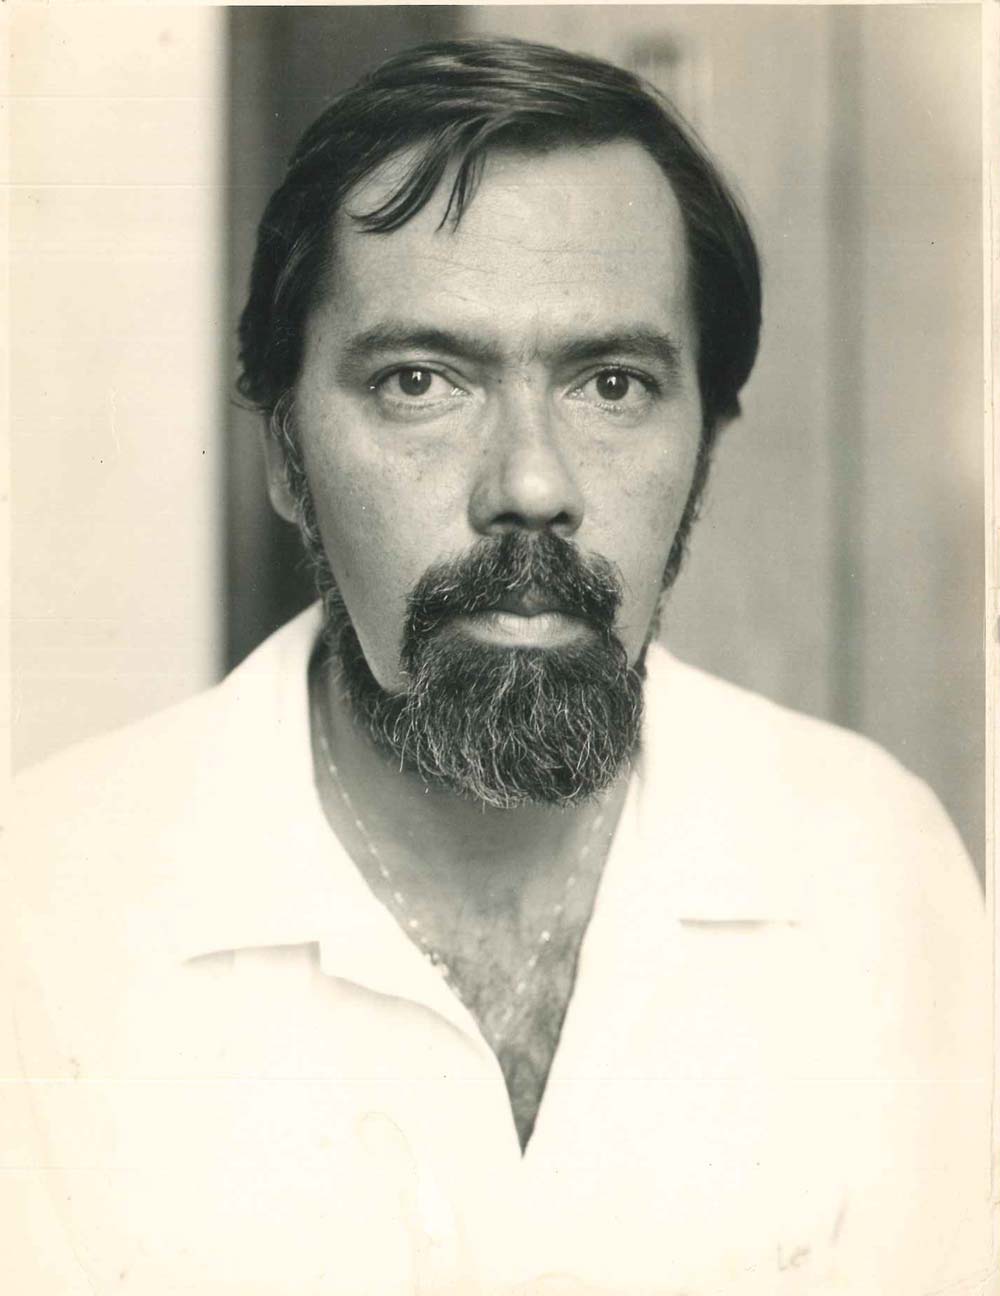 Roberto Seljan Braga, c. 1980, por Clovis Scapino. Arquivo pessoal Roberto Seljan Braga